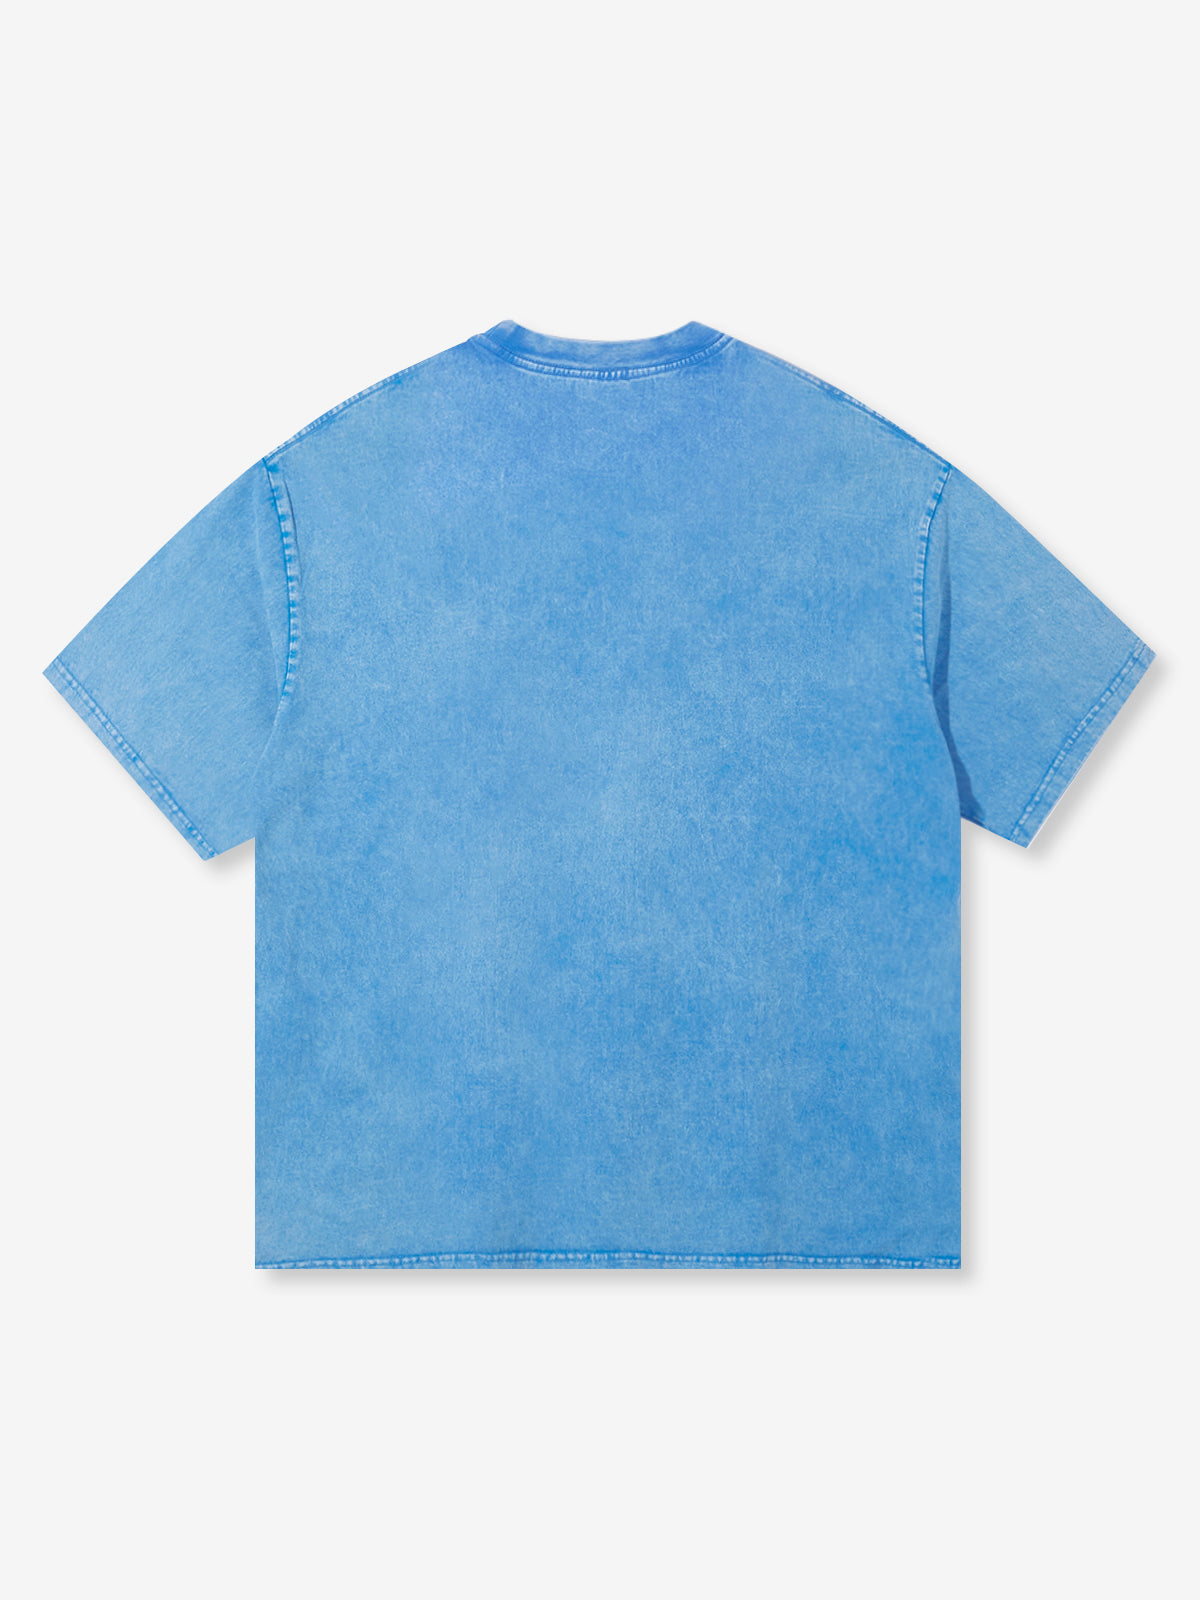 HINDERNISSE &amp; GEFAHREN© Praying Hands Blue Ocean T-Shirt